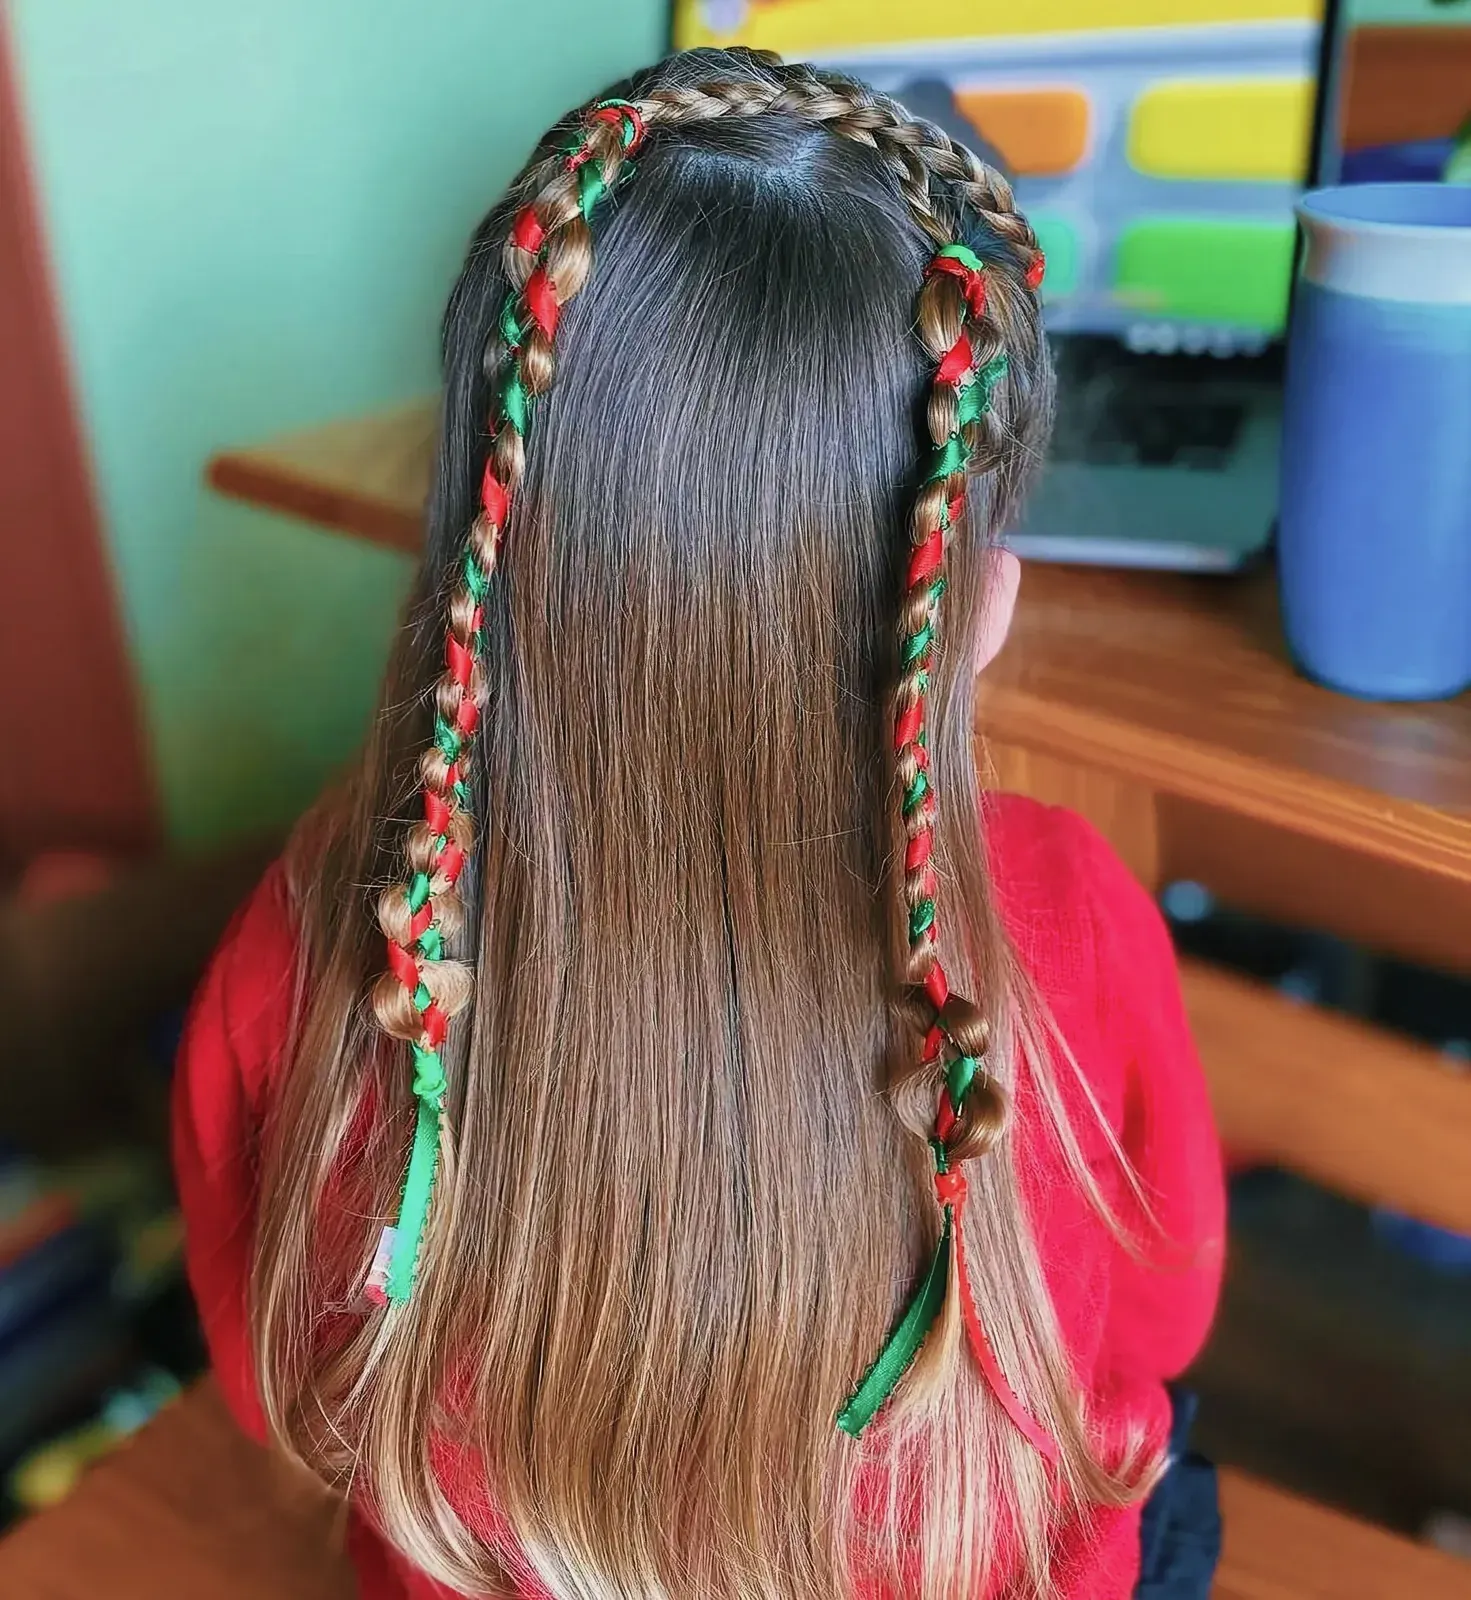 Toddler showcasing a 4-strand ribbon braid hairstyle